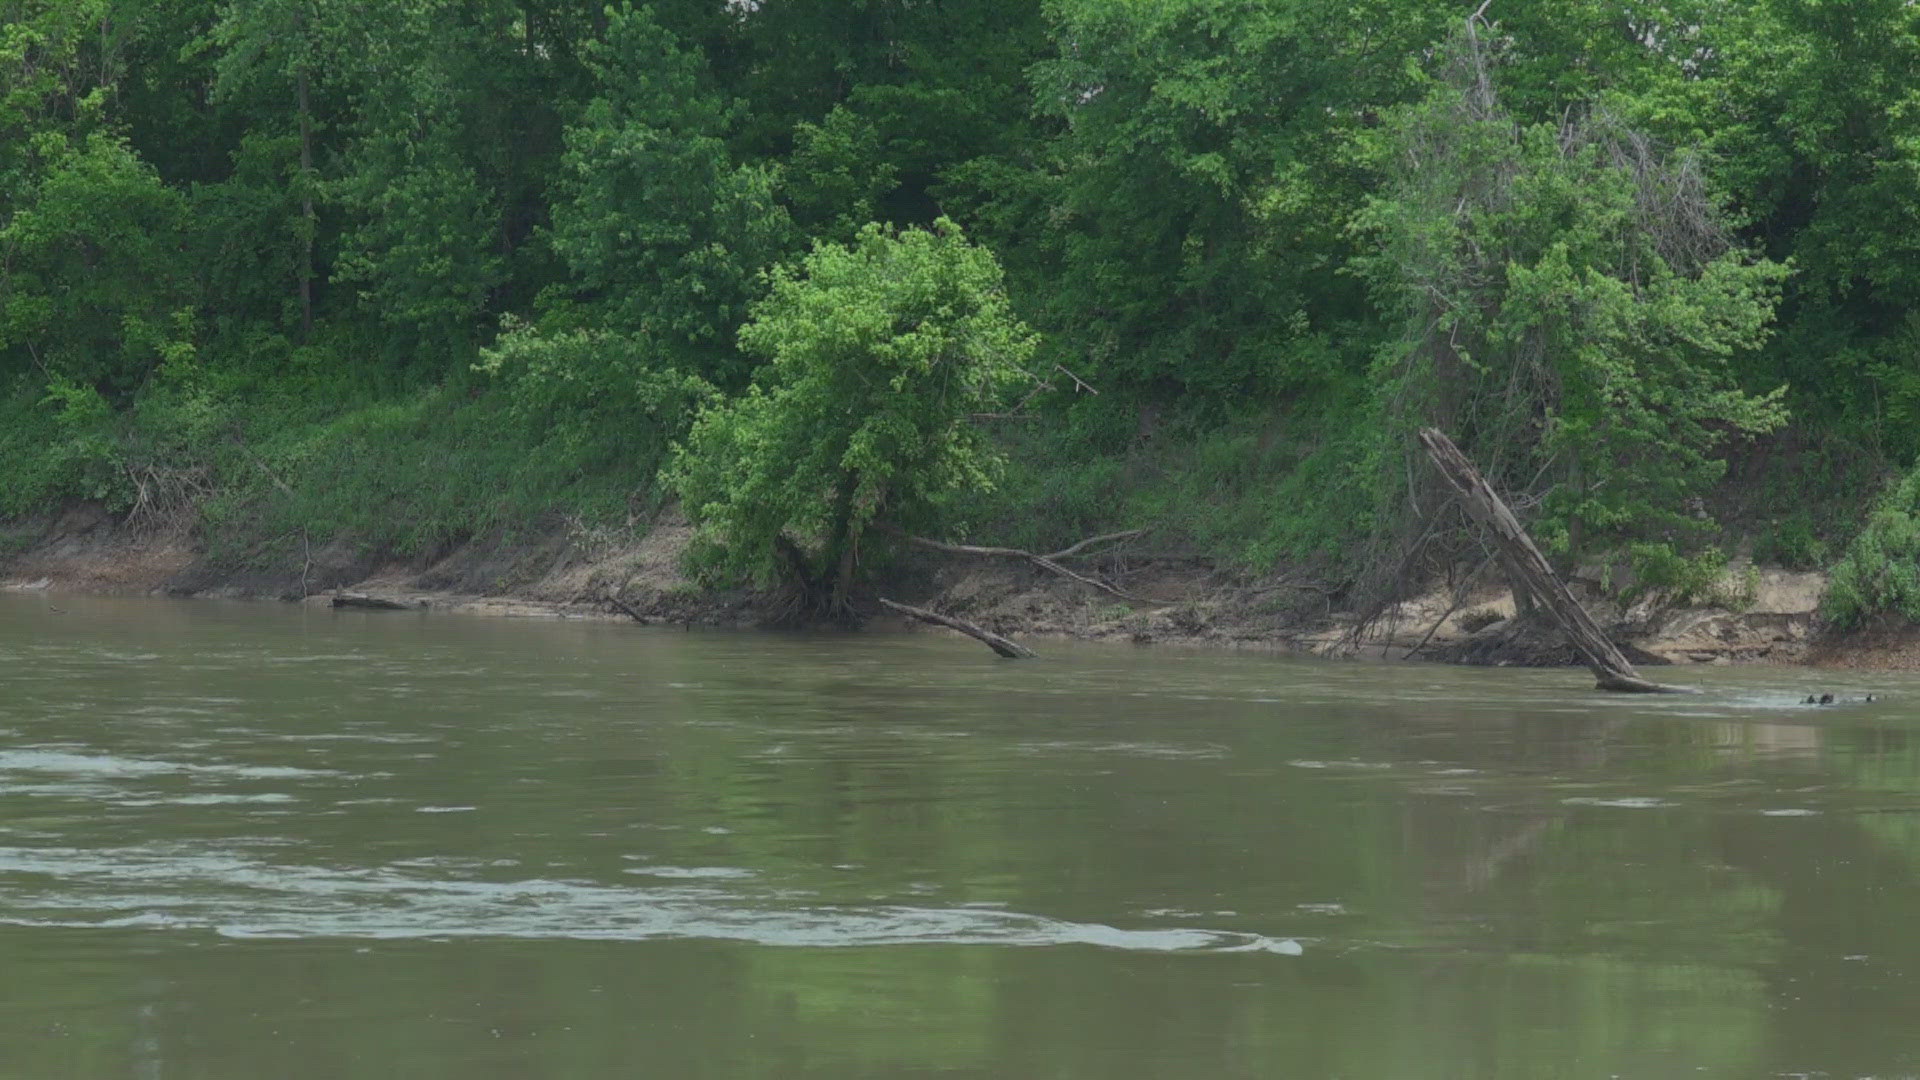 Recent rainfall has put Missouri rivers at dangerous levels. Swift and muddy water has hidden dangers below the surface.